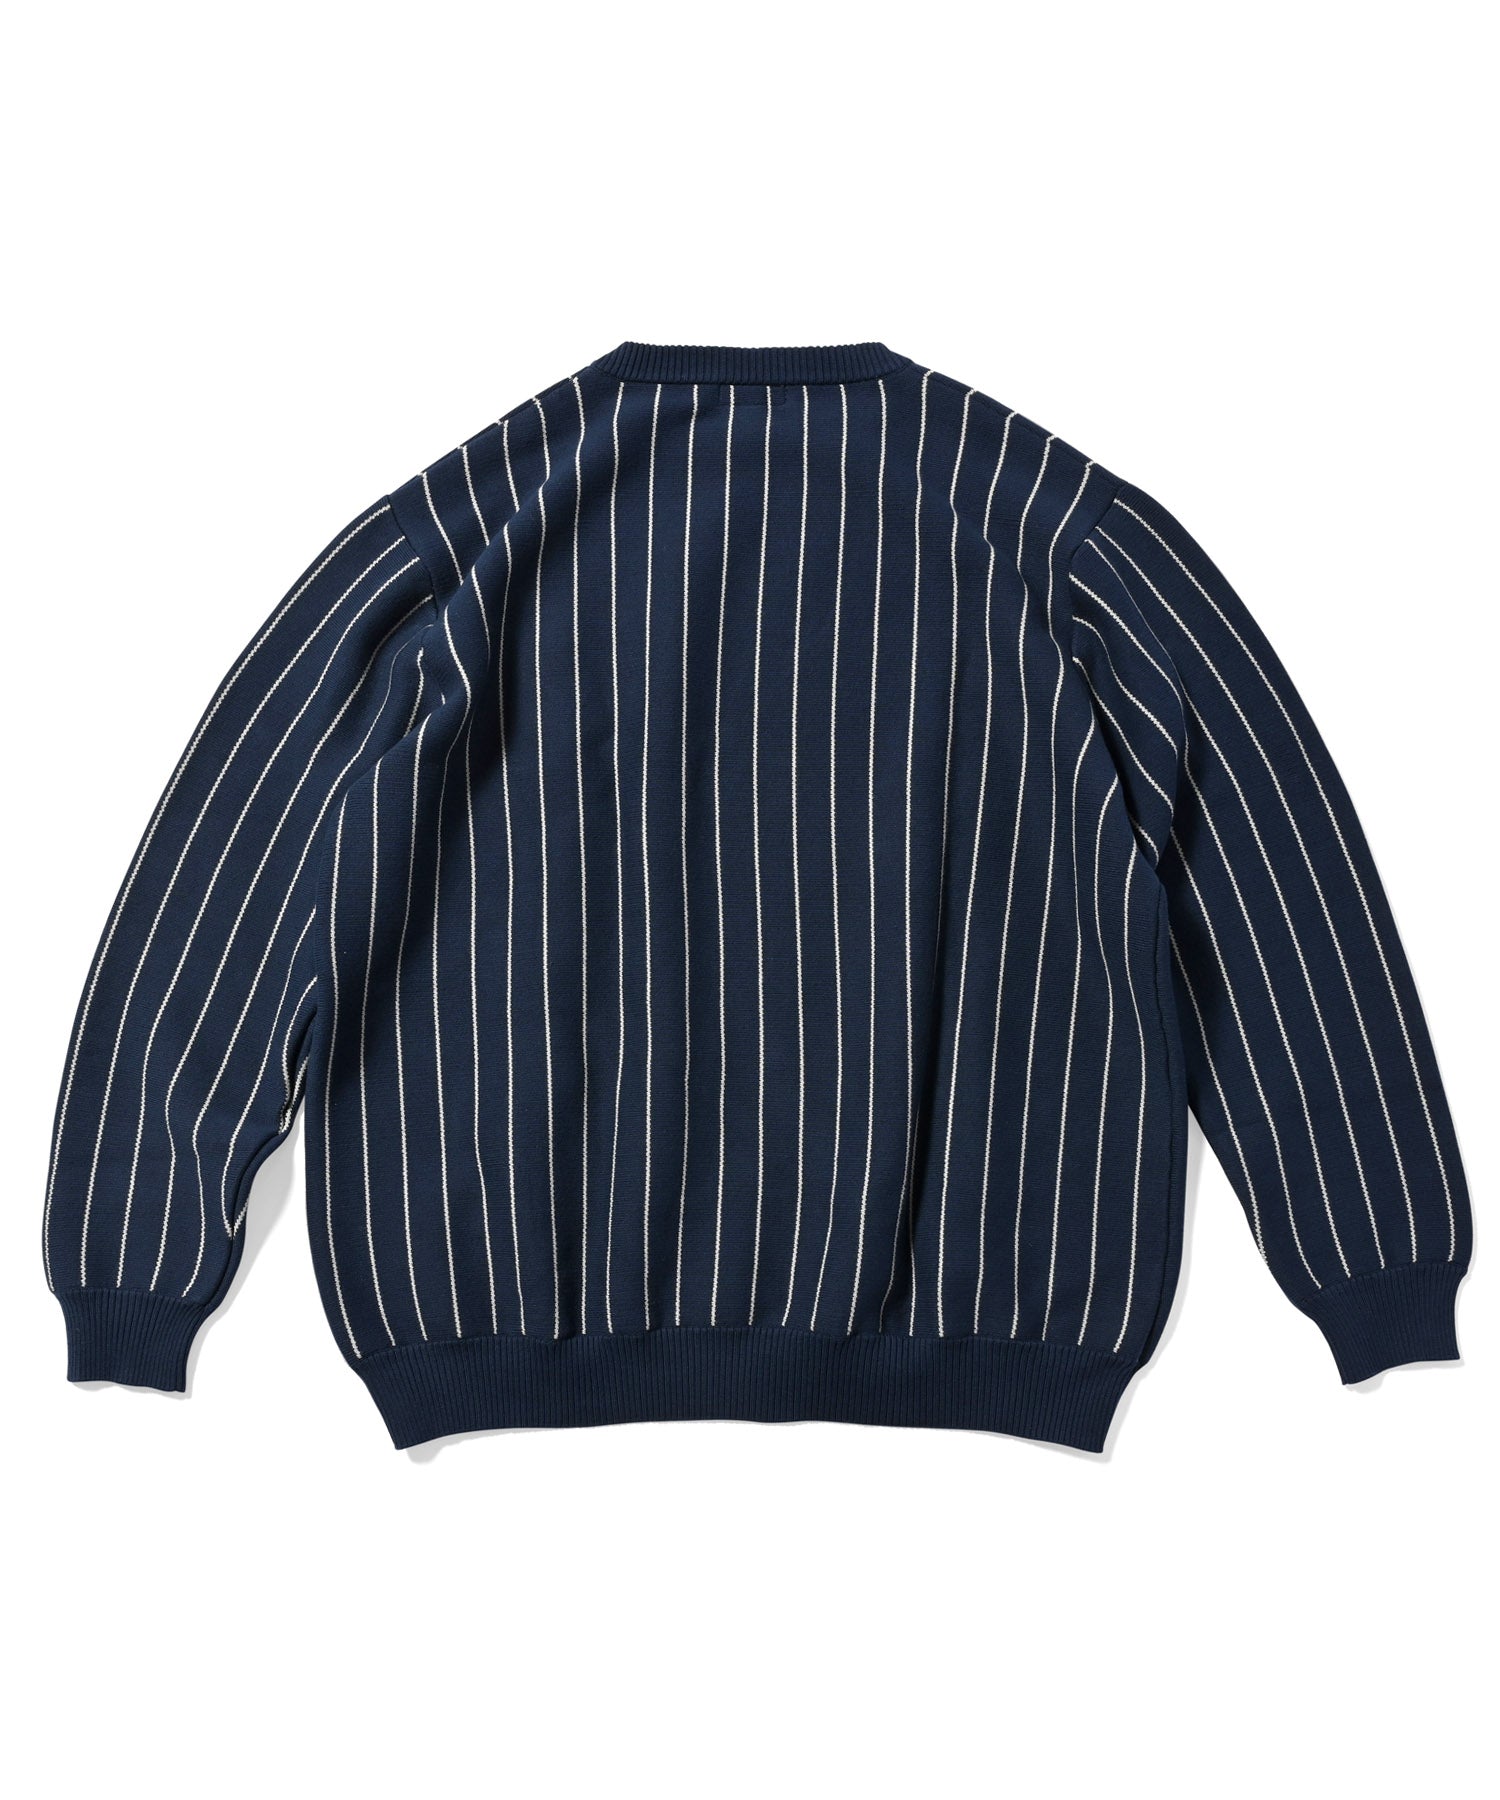 LFYT - 細條紋棉質毛衣 LA230401